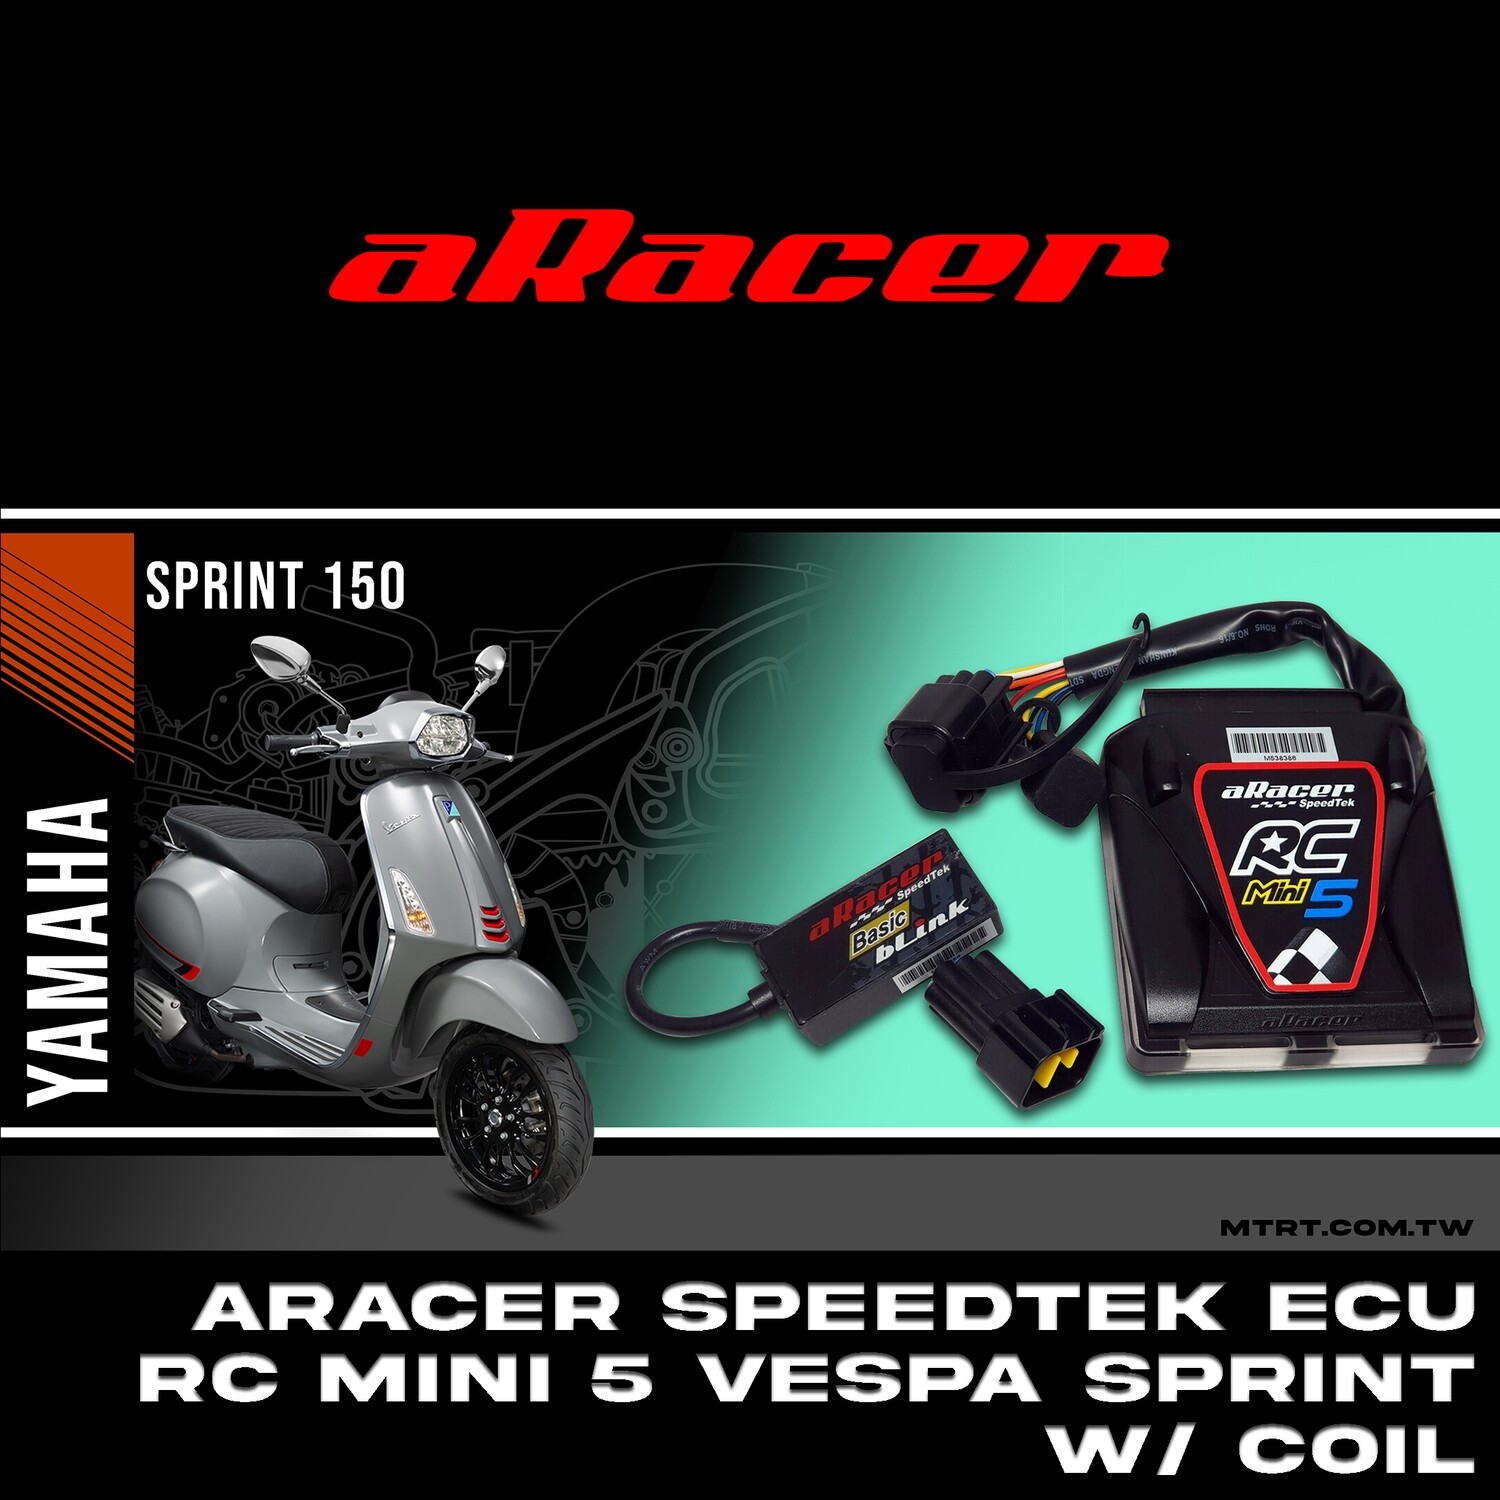 ARACER speedtek ECU RC Mini 5 VESPA SPRINT WITH ARACER  COIL